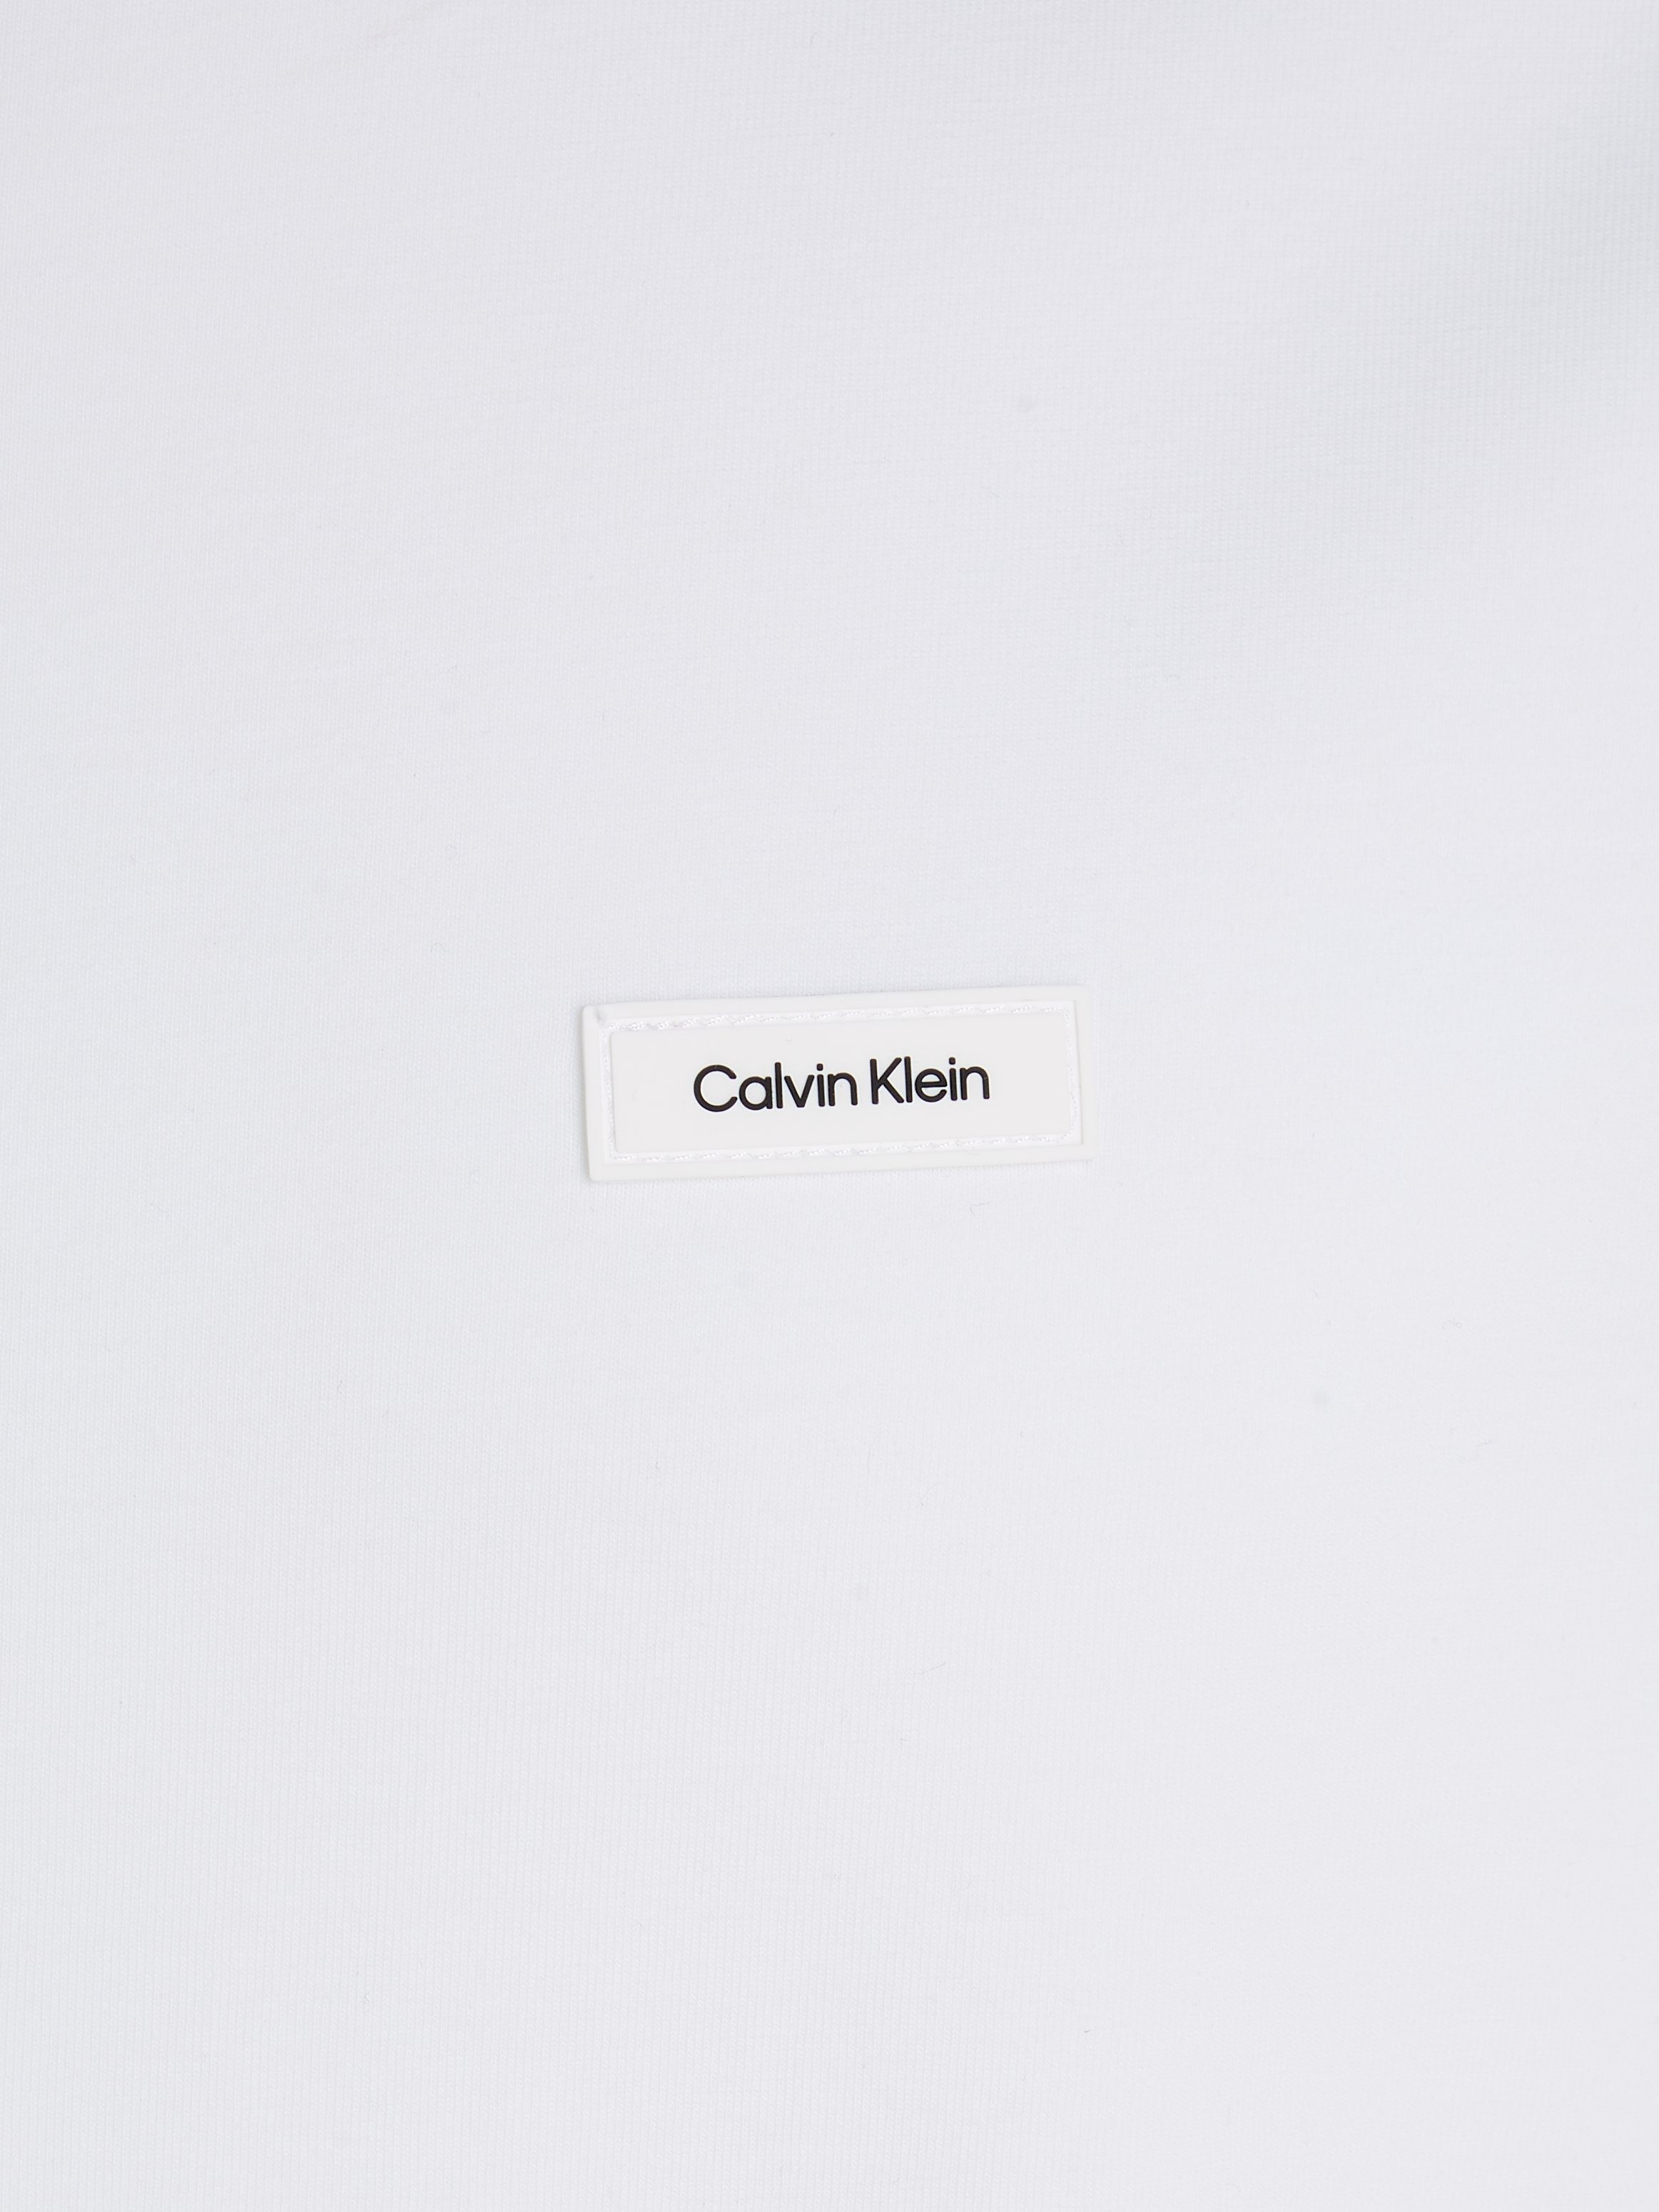 T-SHIRT White Klein SLIM Calvin FIT T-Shirt STRETCH Bright